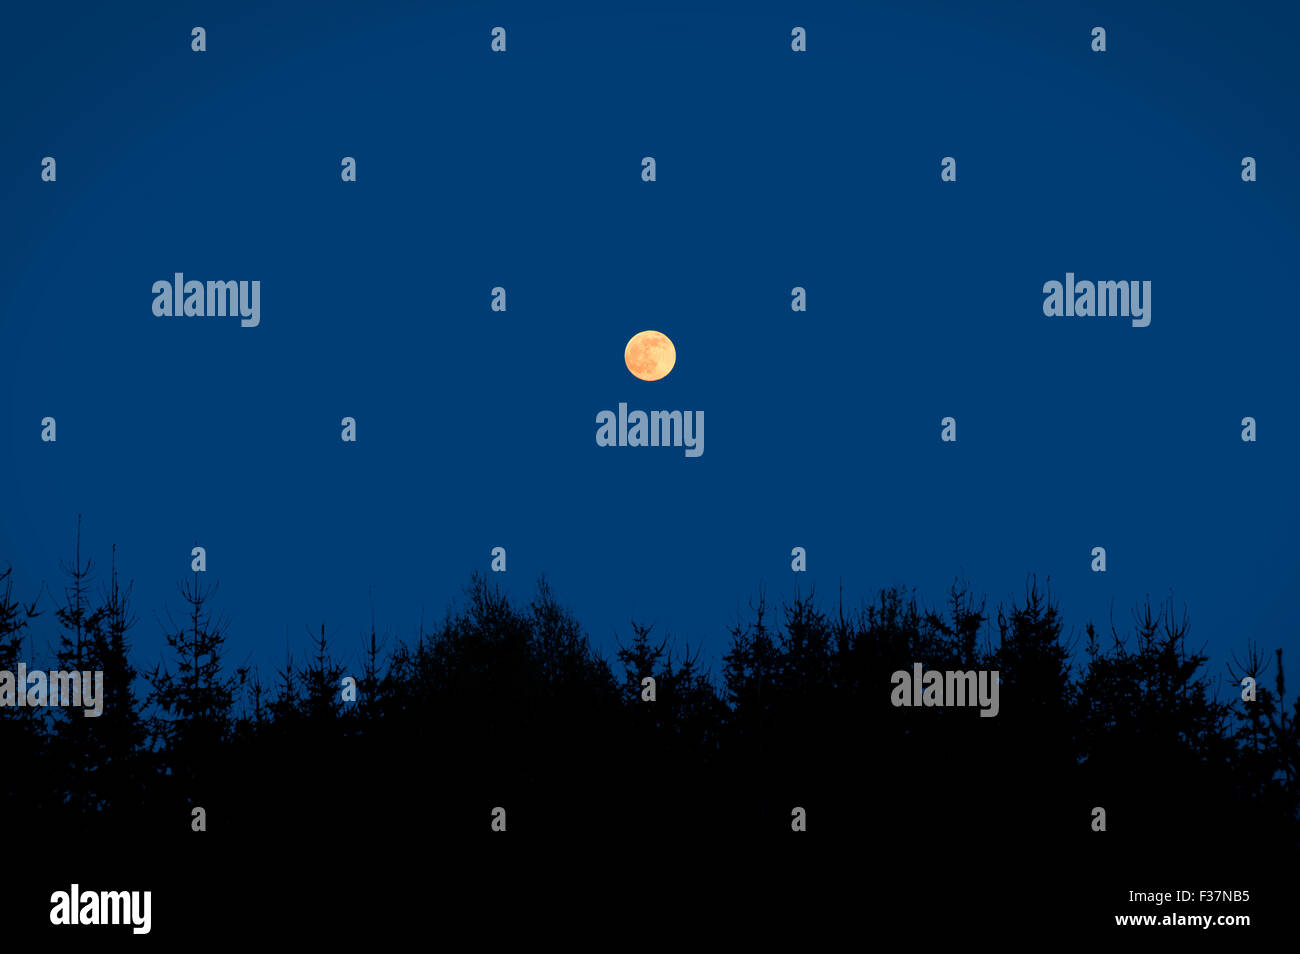 Full moon on the sky over trees. Night scene. Stock Photo